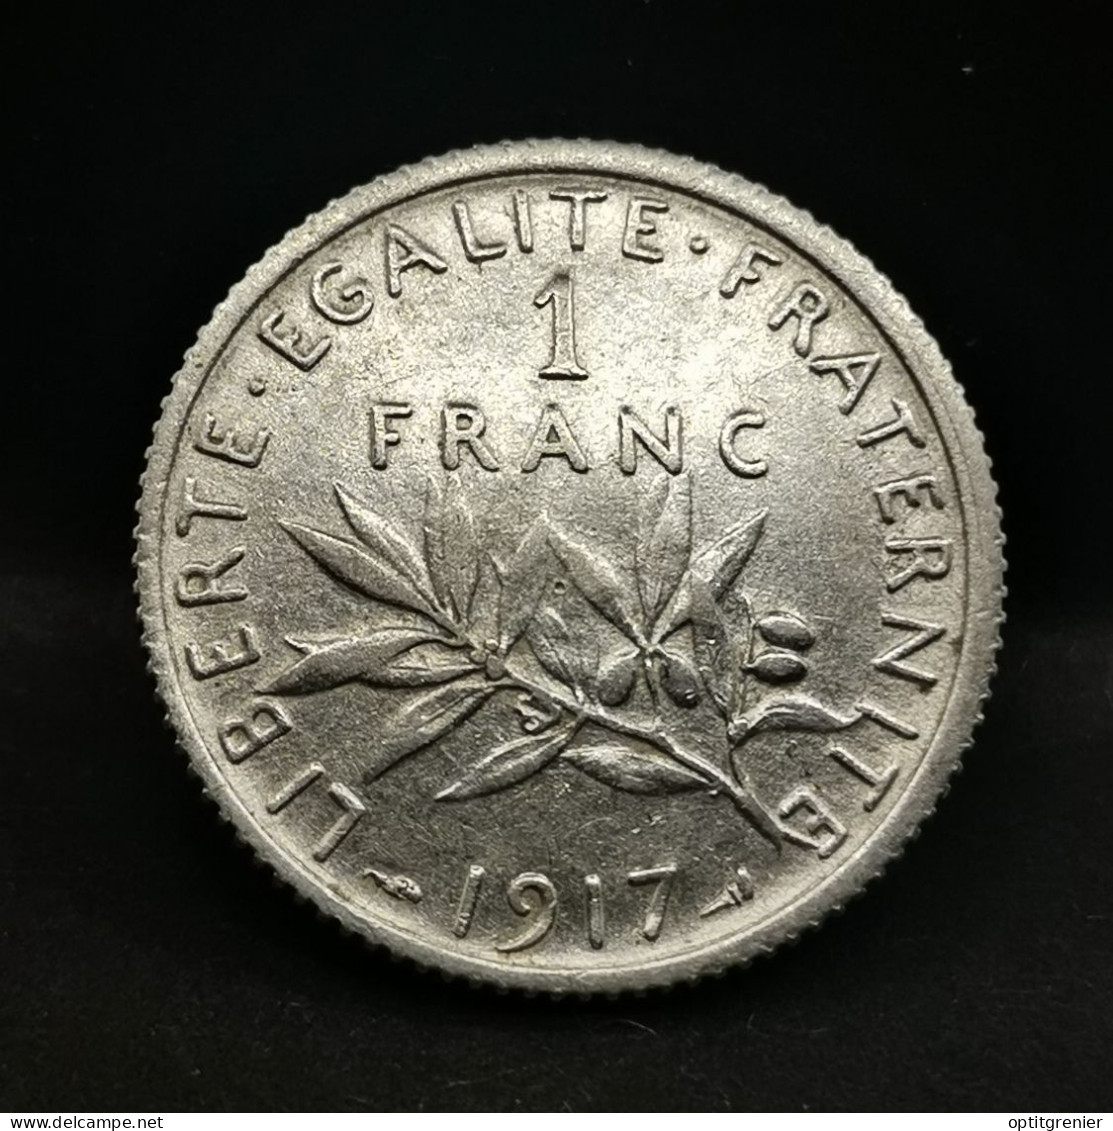 1 FRANC SEMEUSE ARGENT 1917 FRANCE / SILVER (Réf. 24425) - 1 Franc